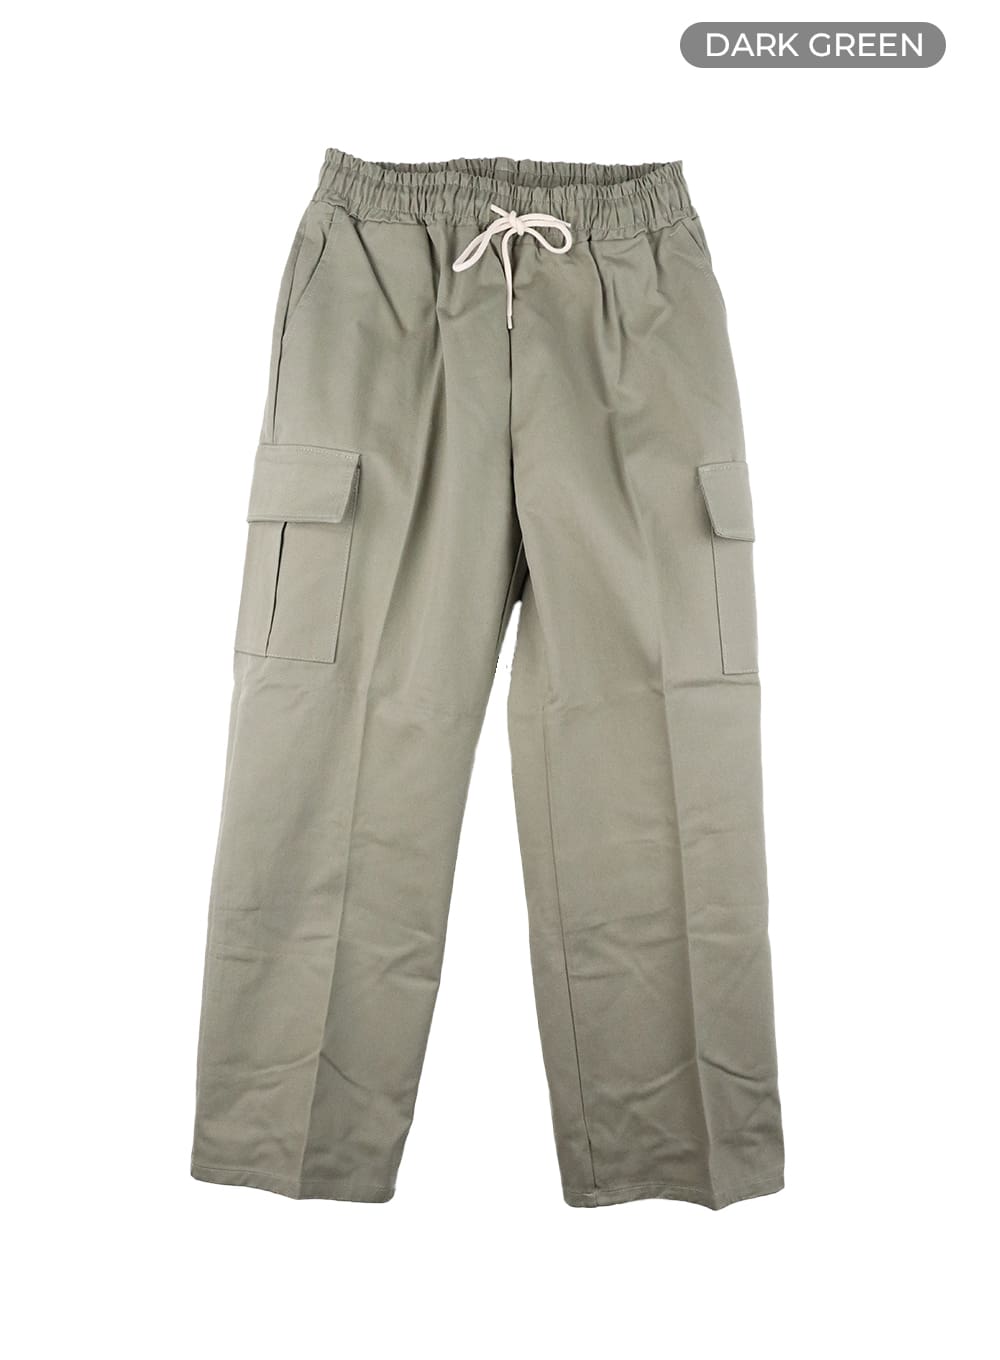 mens-cargo-straight-leg-pants-ia402 / Dark green